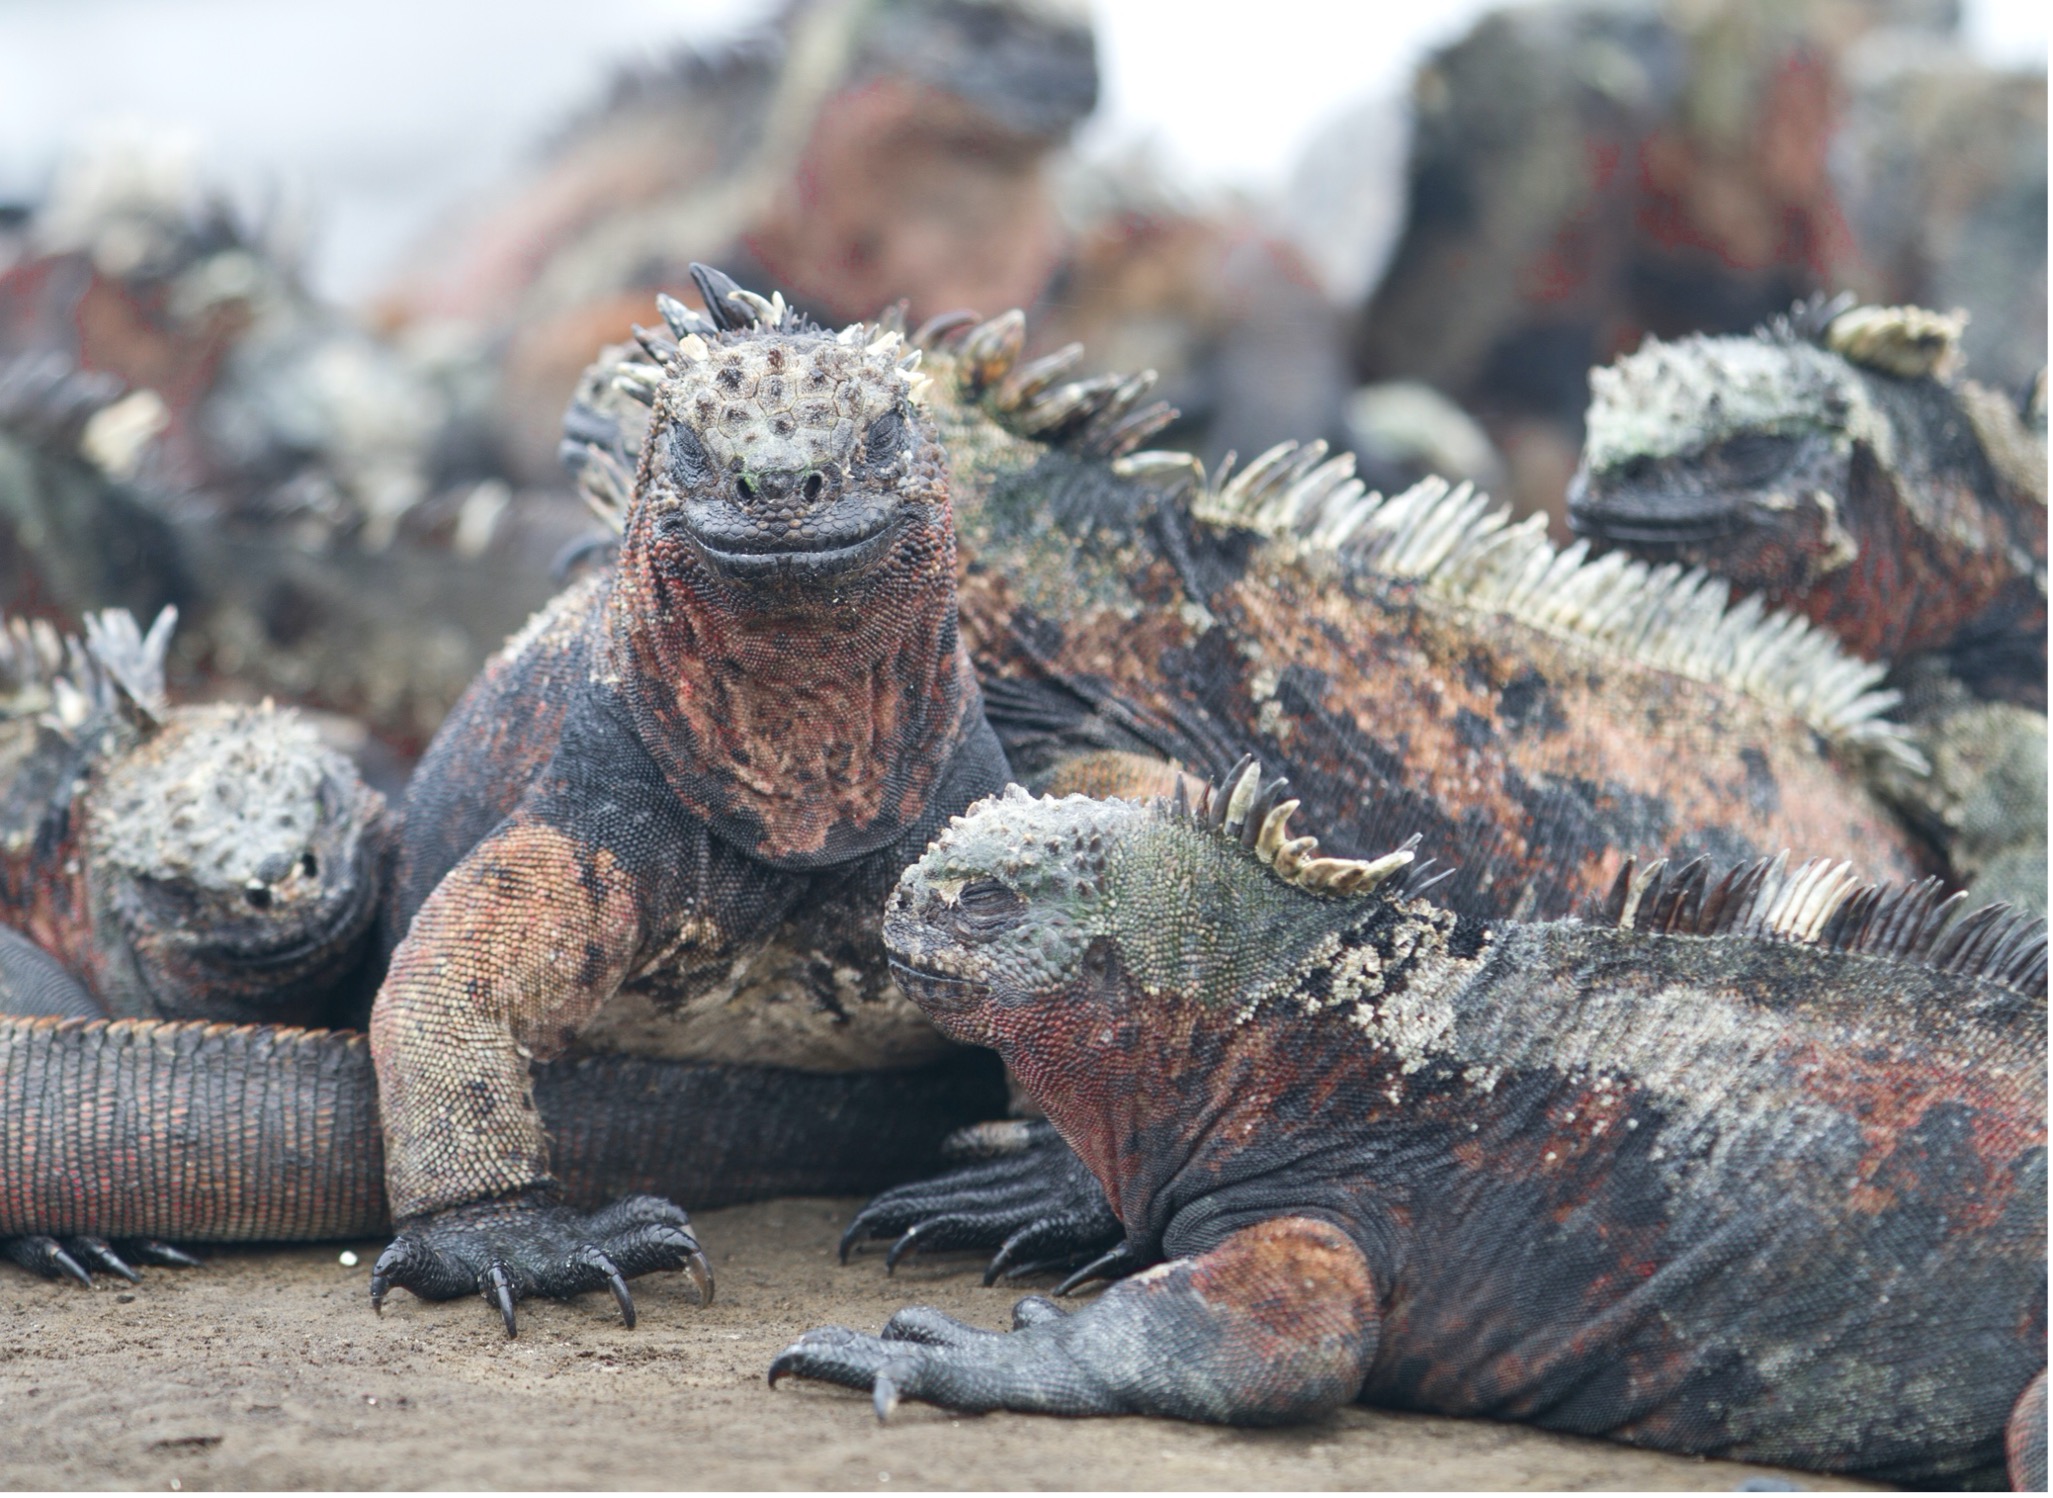 marine iguanas lay in piles